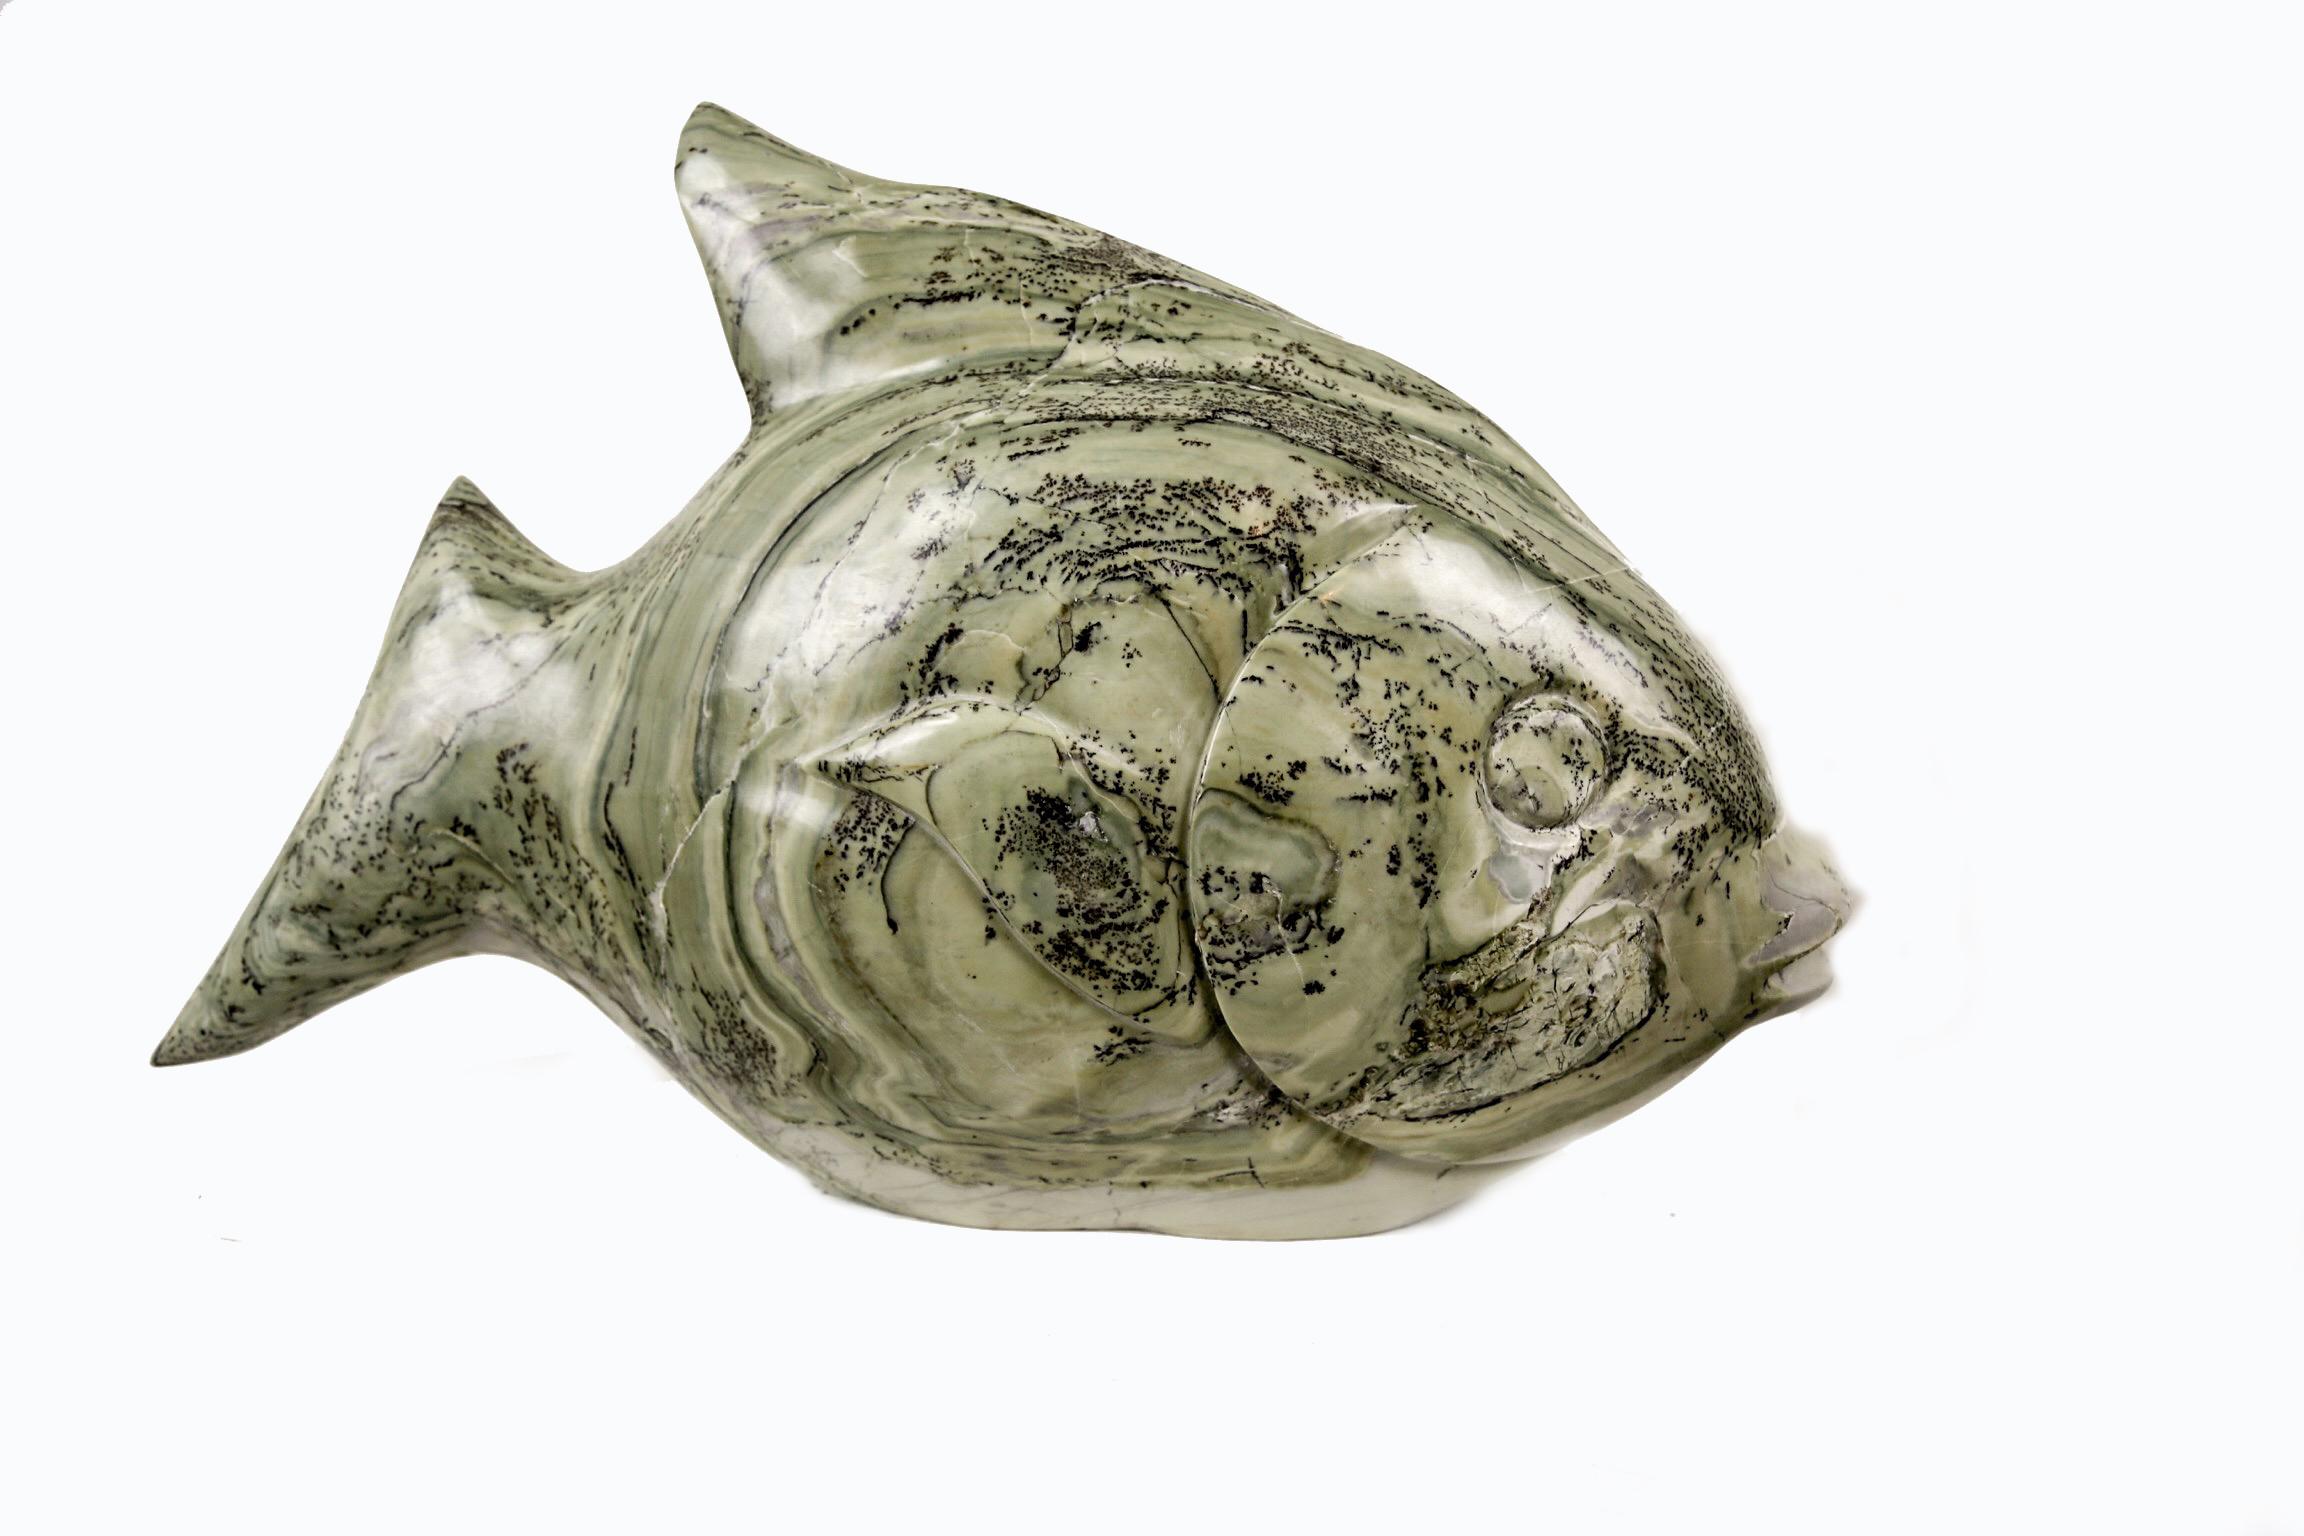 SHAMVA Figurative Sculpture - Fish. Stone Sculpture. Butterjade Stone. Polished.  Green /Teal fossils embedded